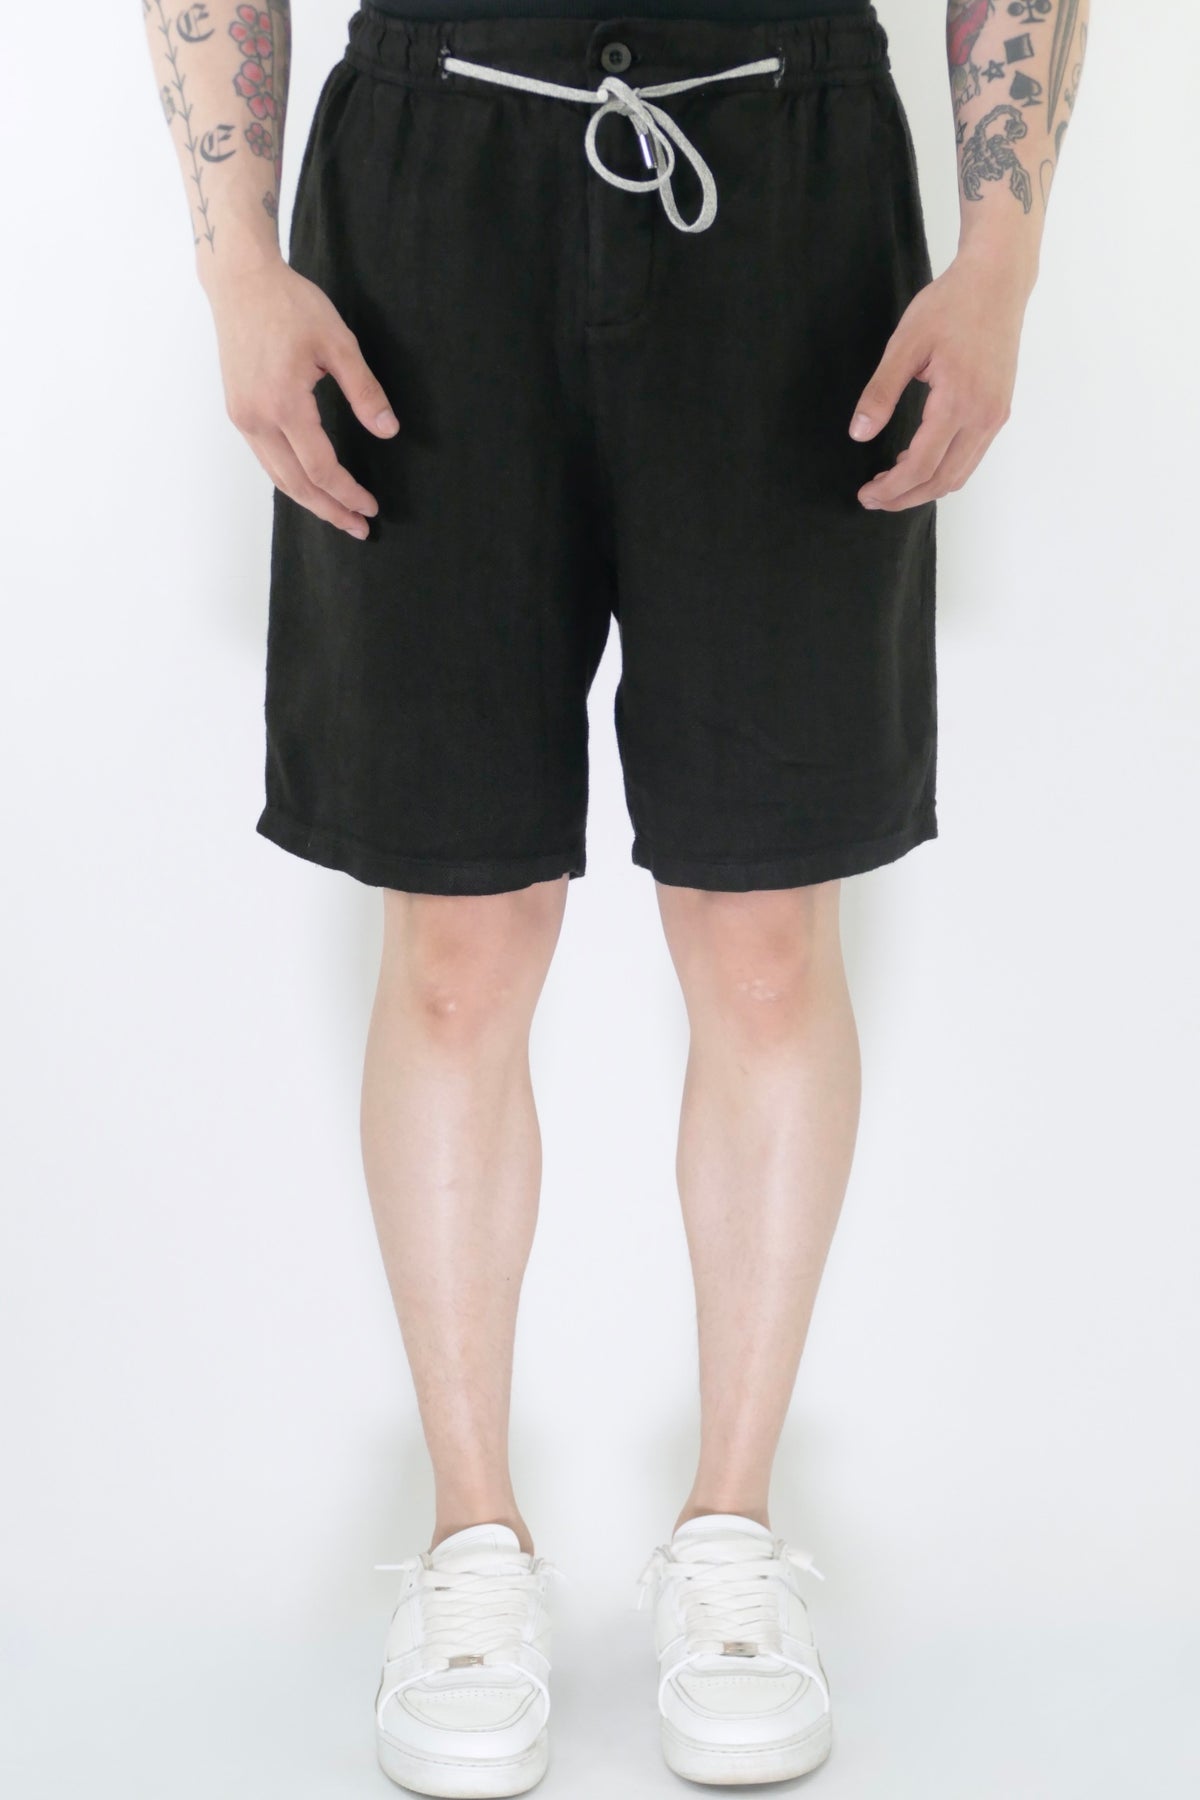 Athoa Herringbone Bermuda Shorts - Black